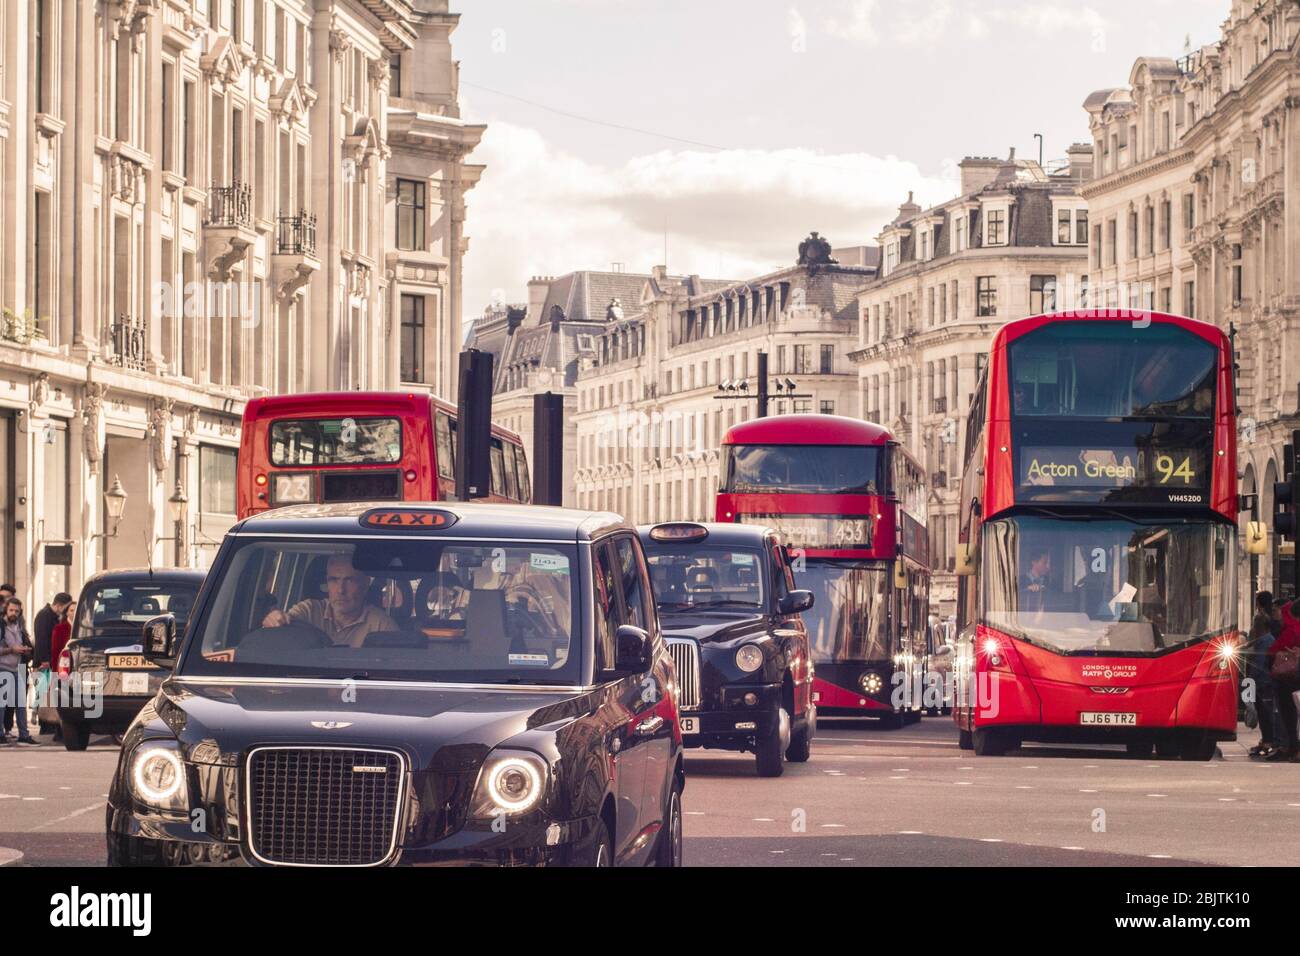 London- Oxford Street, landmark street and wold famous retail destination Stock Photo